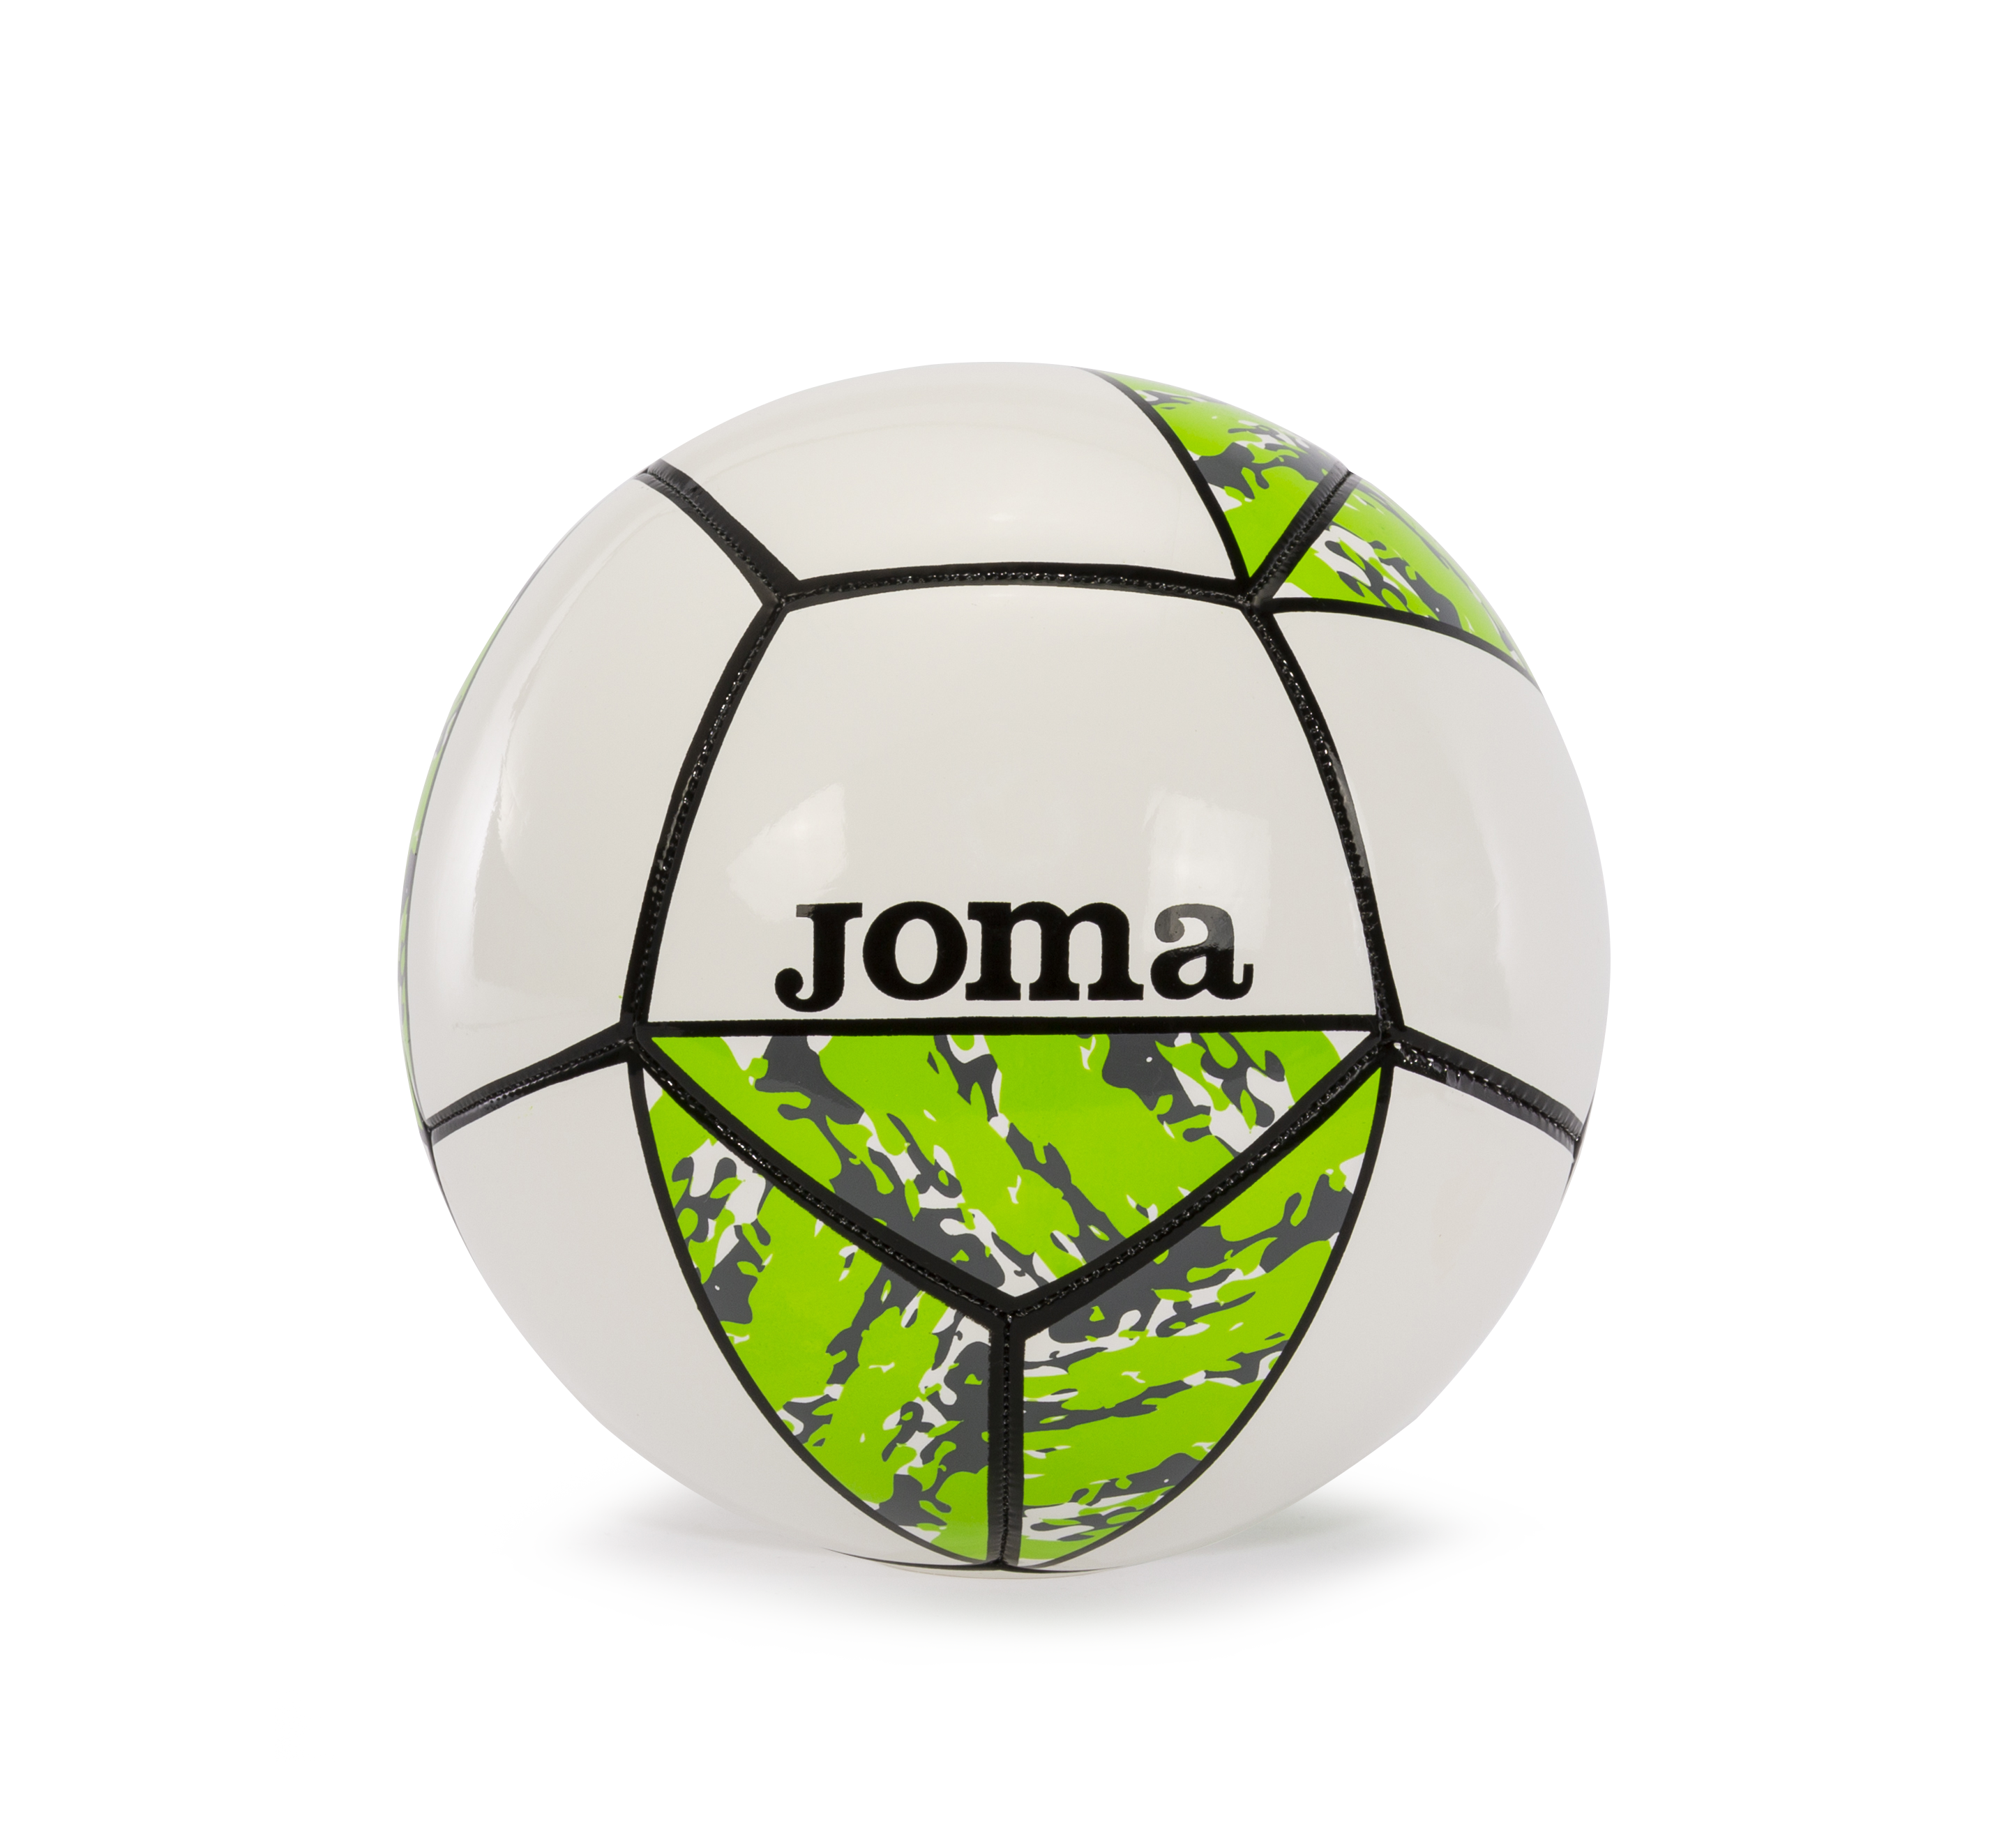 Minge fotbal Joma Challenge II, T3